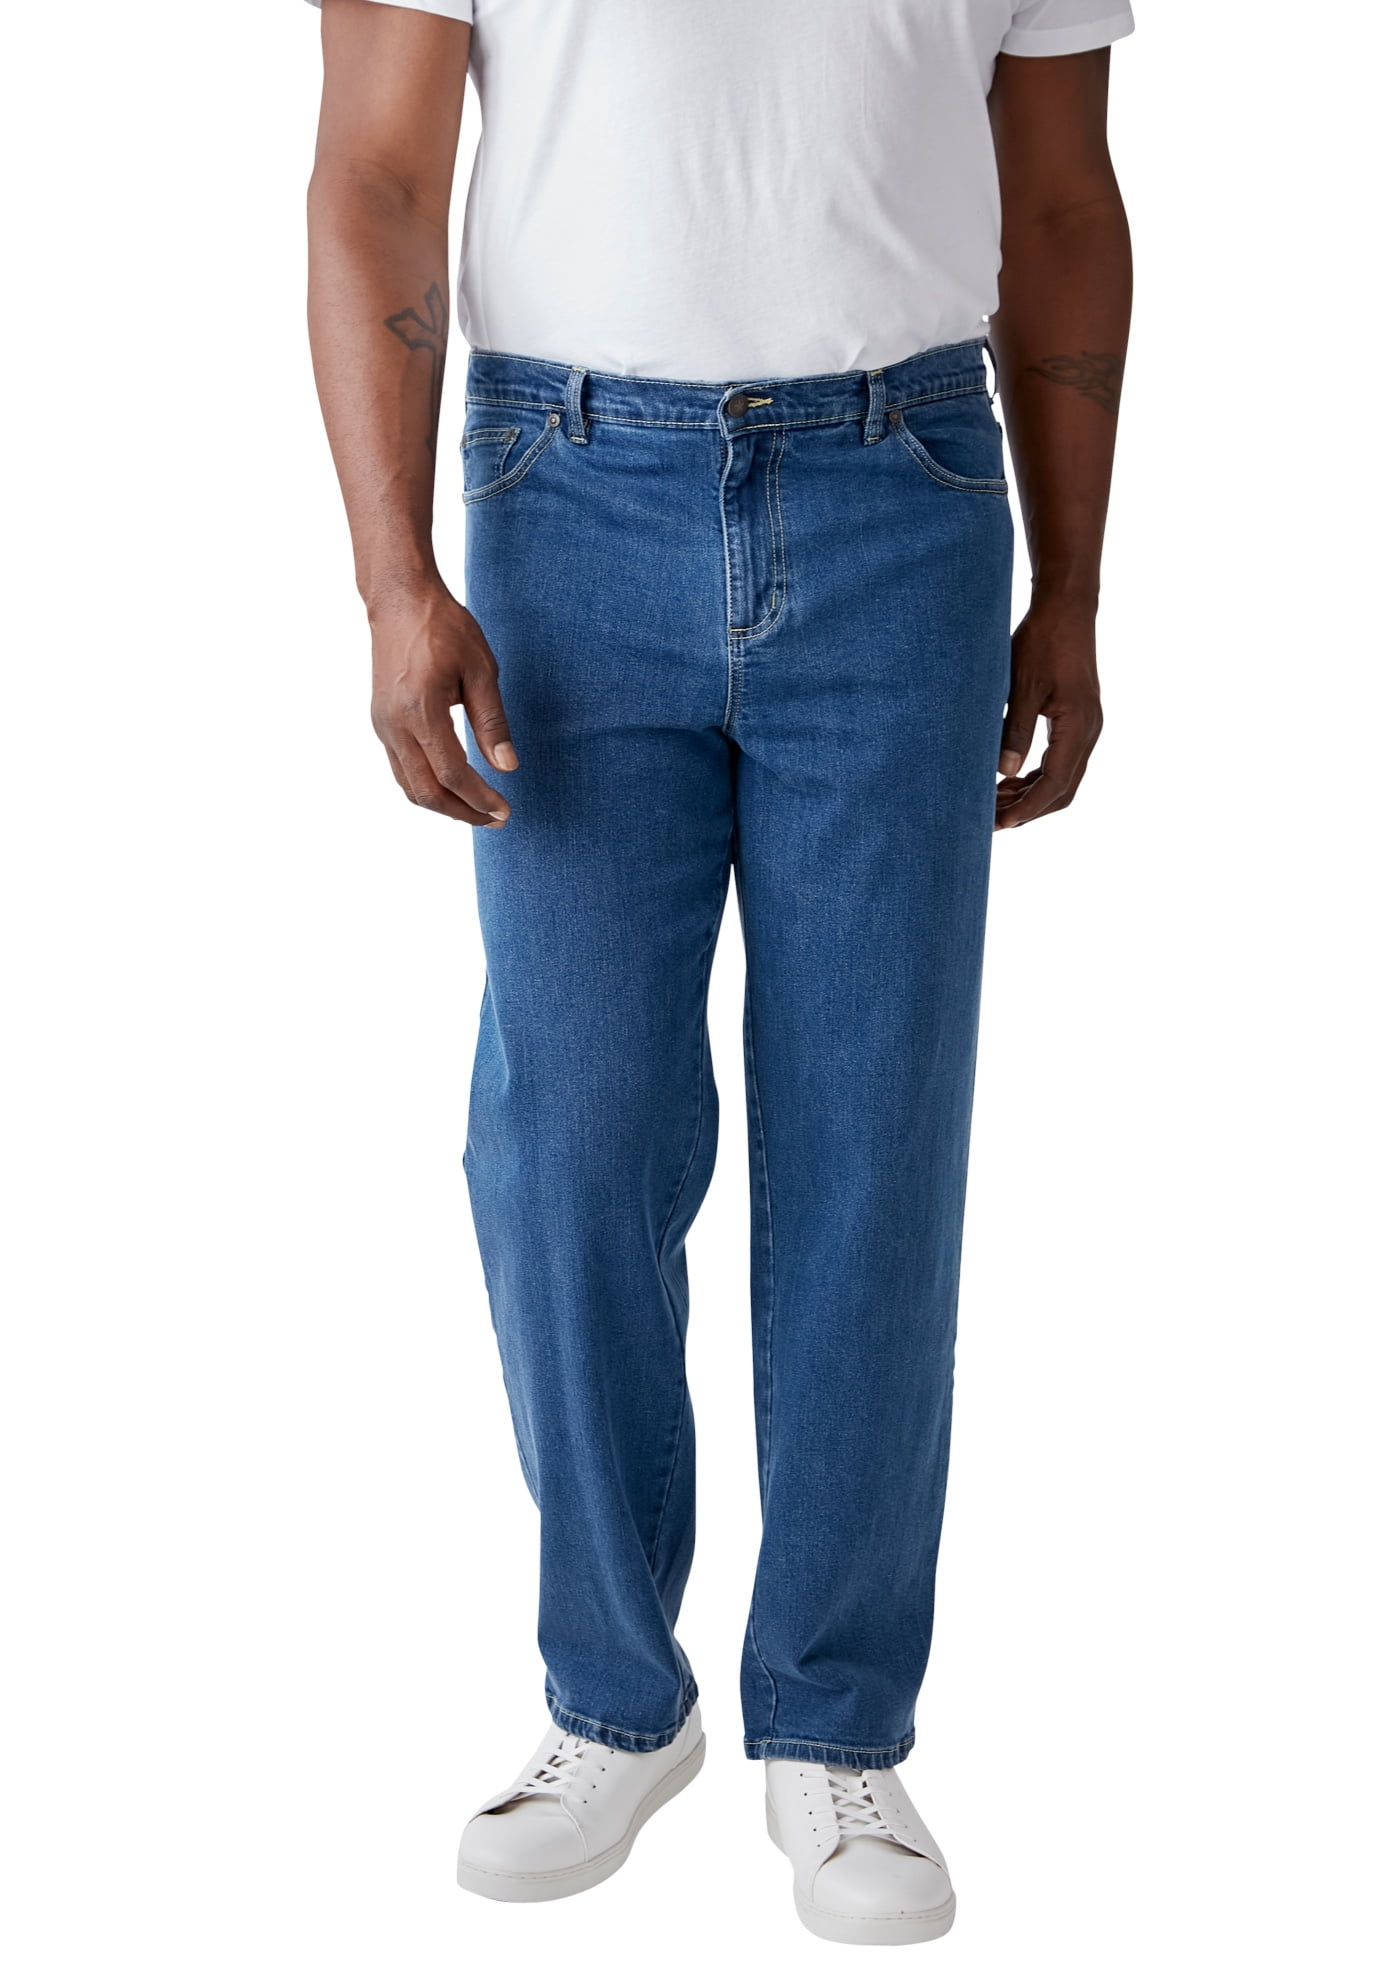 J Brand Mens Kane Stretch Jeans, Blue, 36W x 35L 